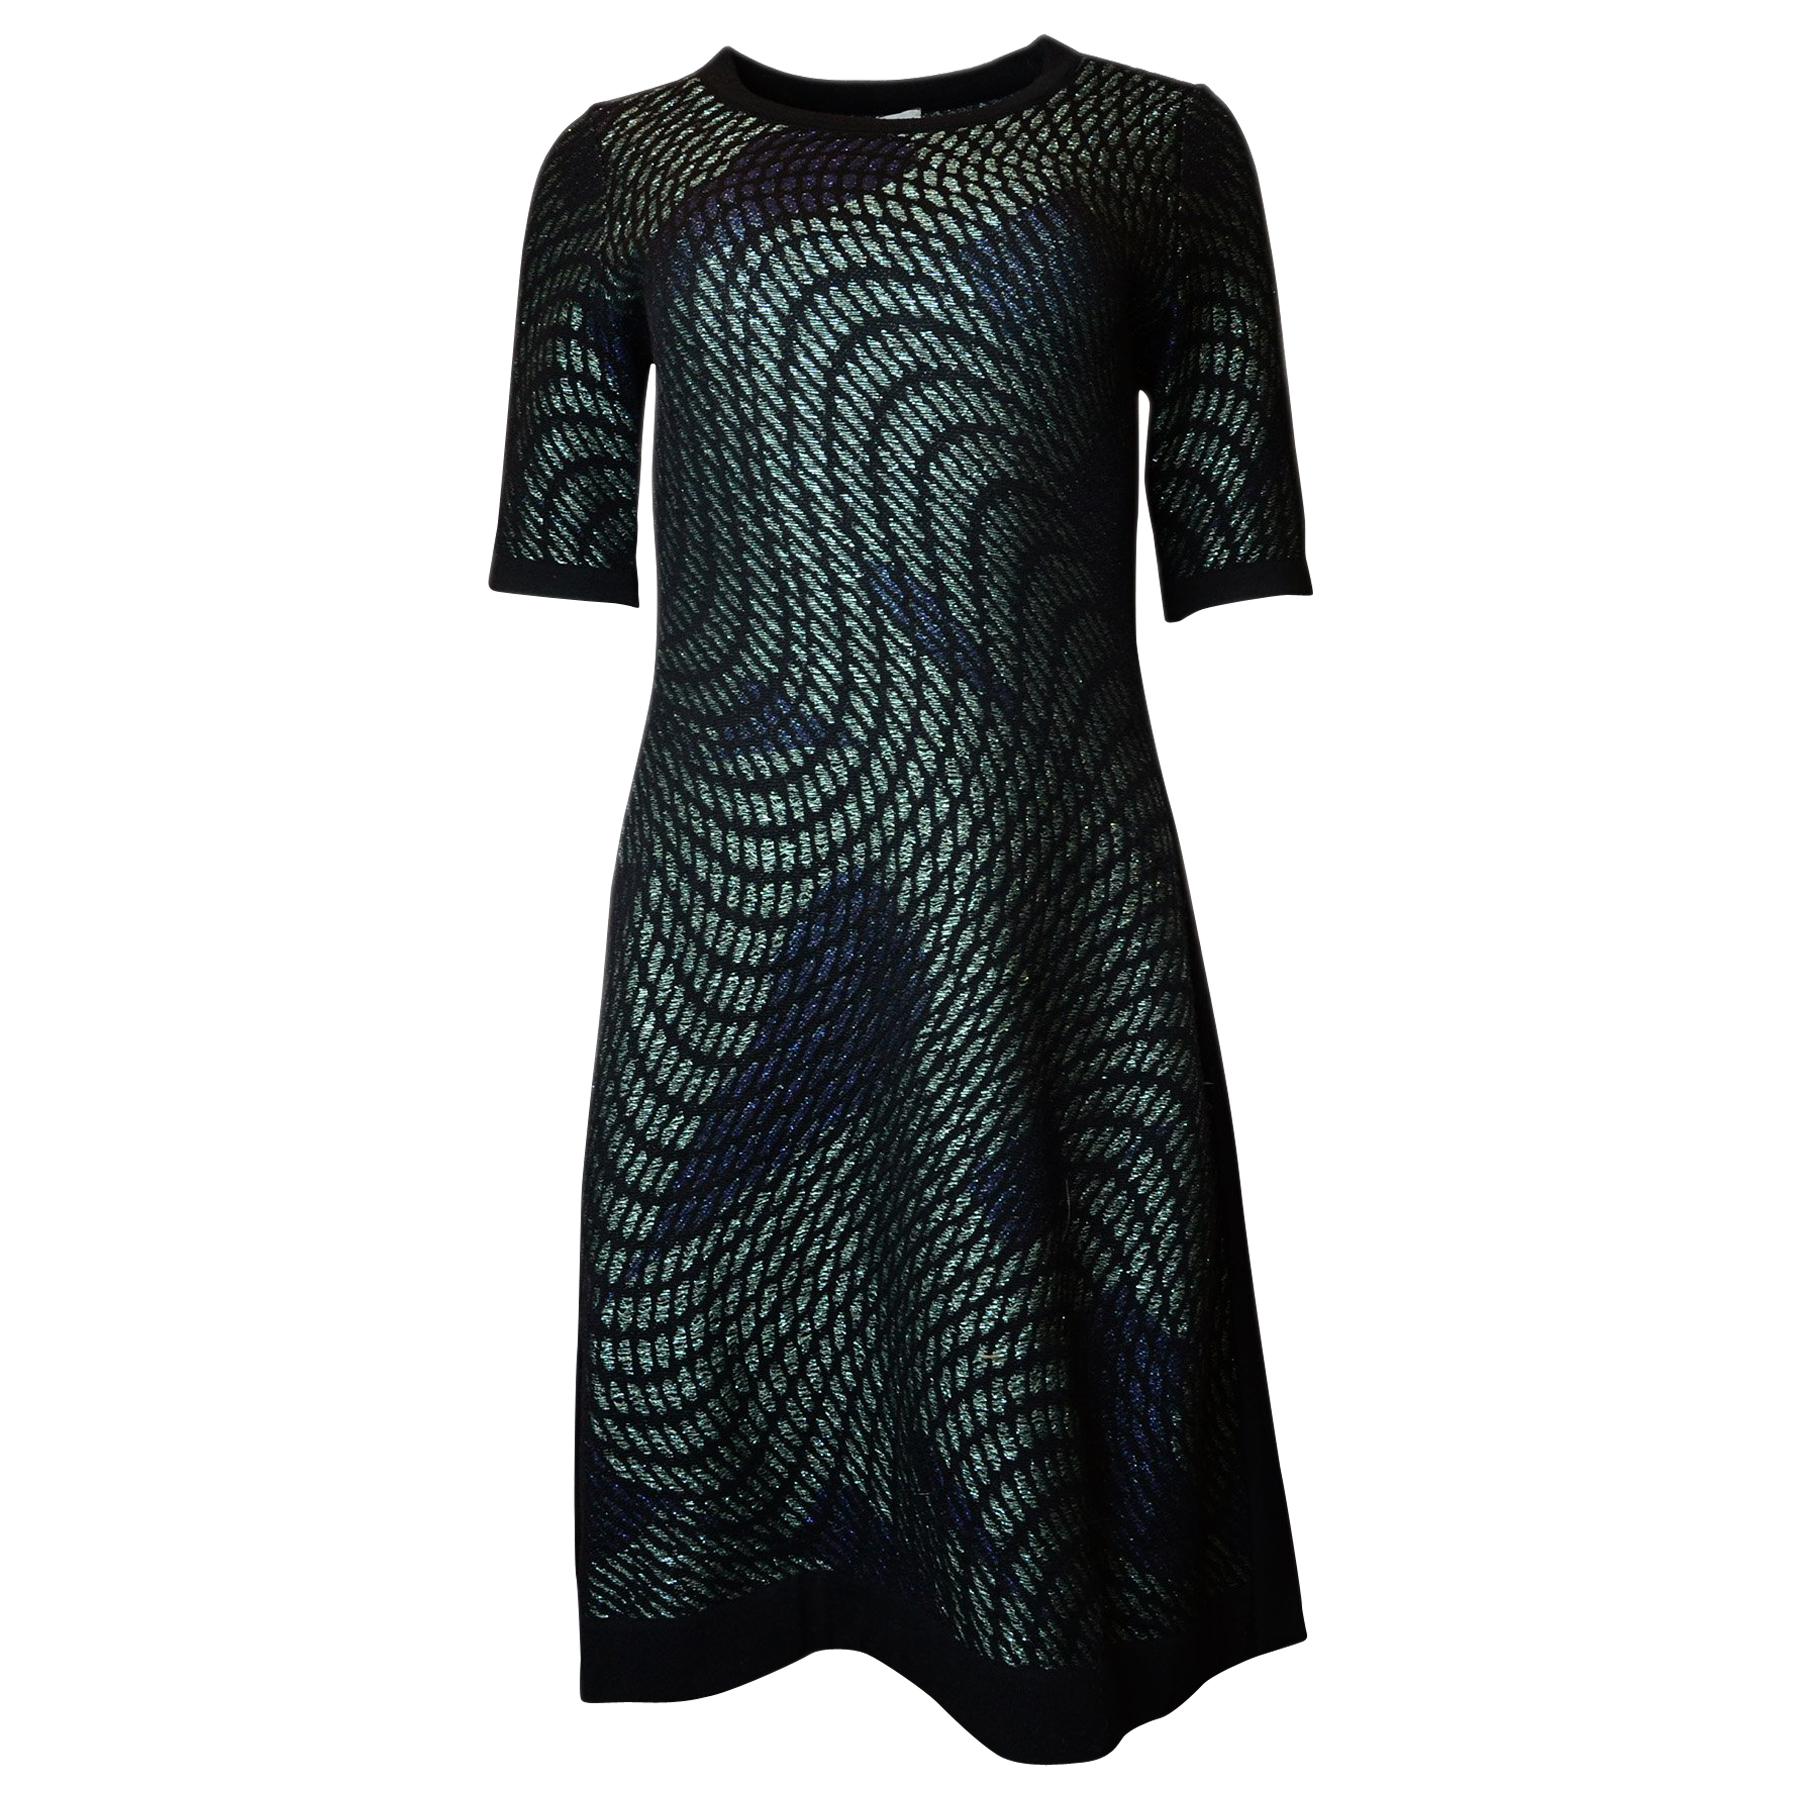 M Missoni Black/Green Metallic Short Sleeve Dress Sz 42